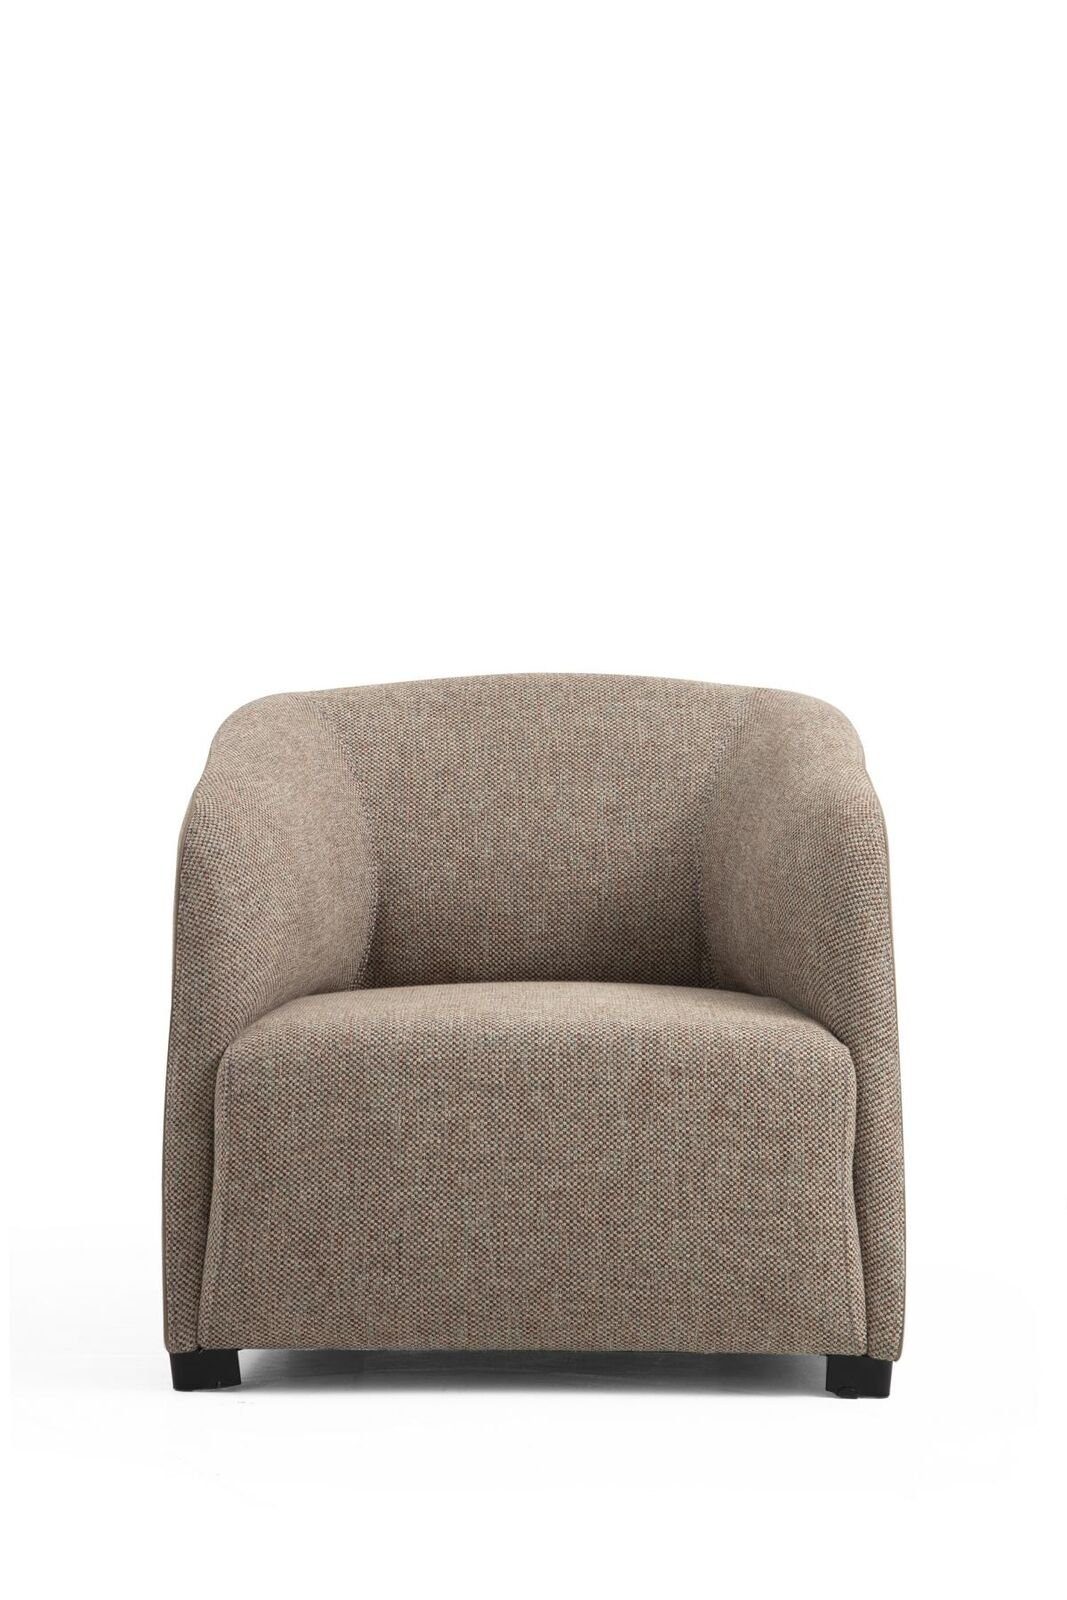 JVmoebel Sessel Sessel Ohrensessel Stoff Beige Wohnzimmer Polyester 1 Sitzer Modern (1-St., 1x nur Sessel), Made in Europa